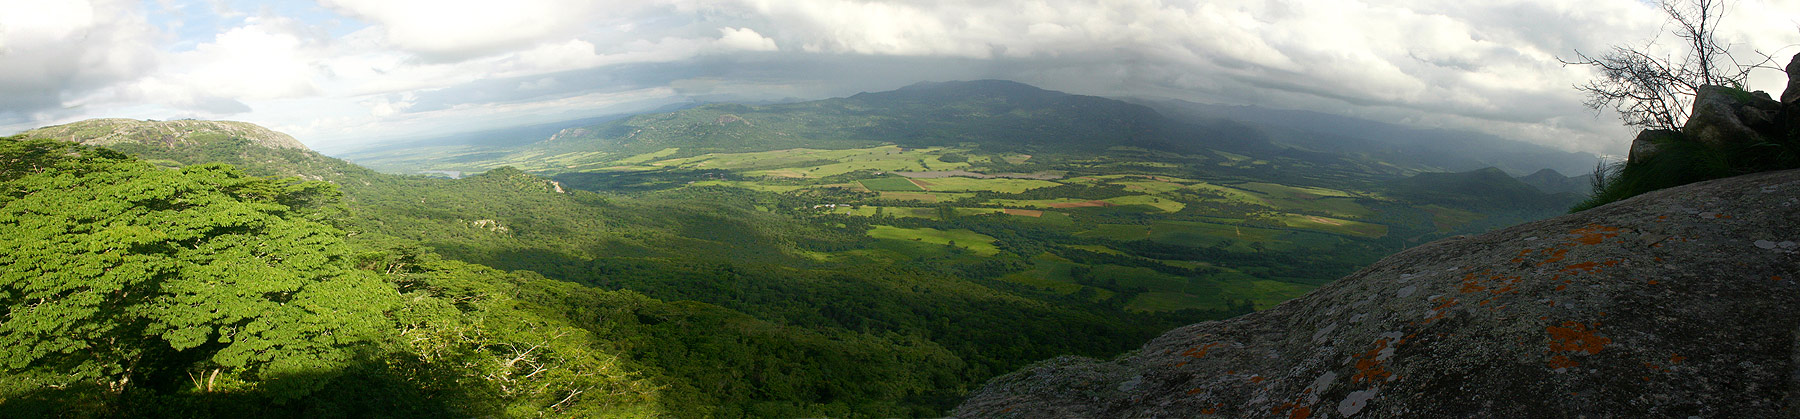 Burma Valley from Eastern Vumba escarpment.